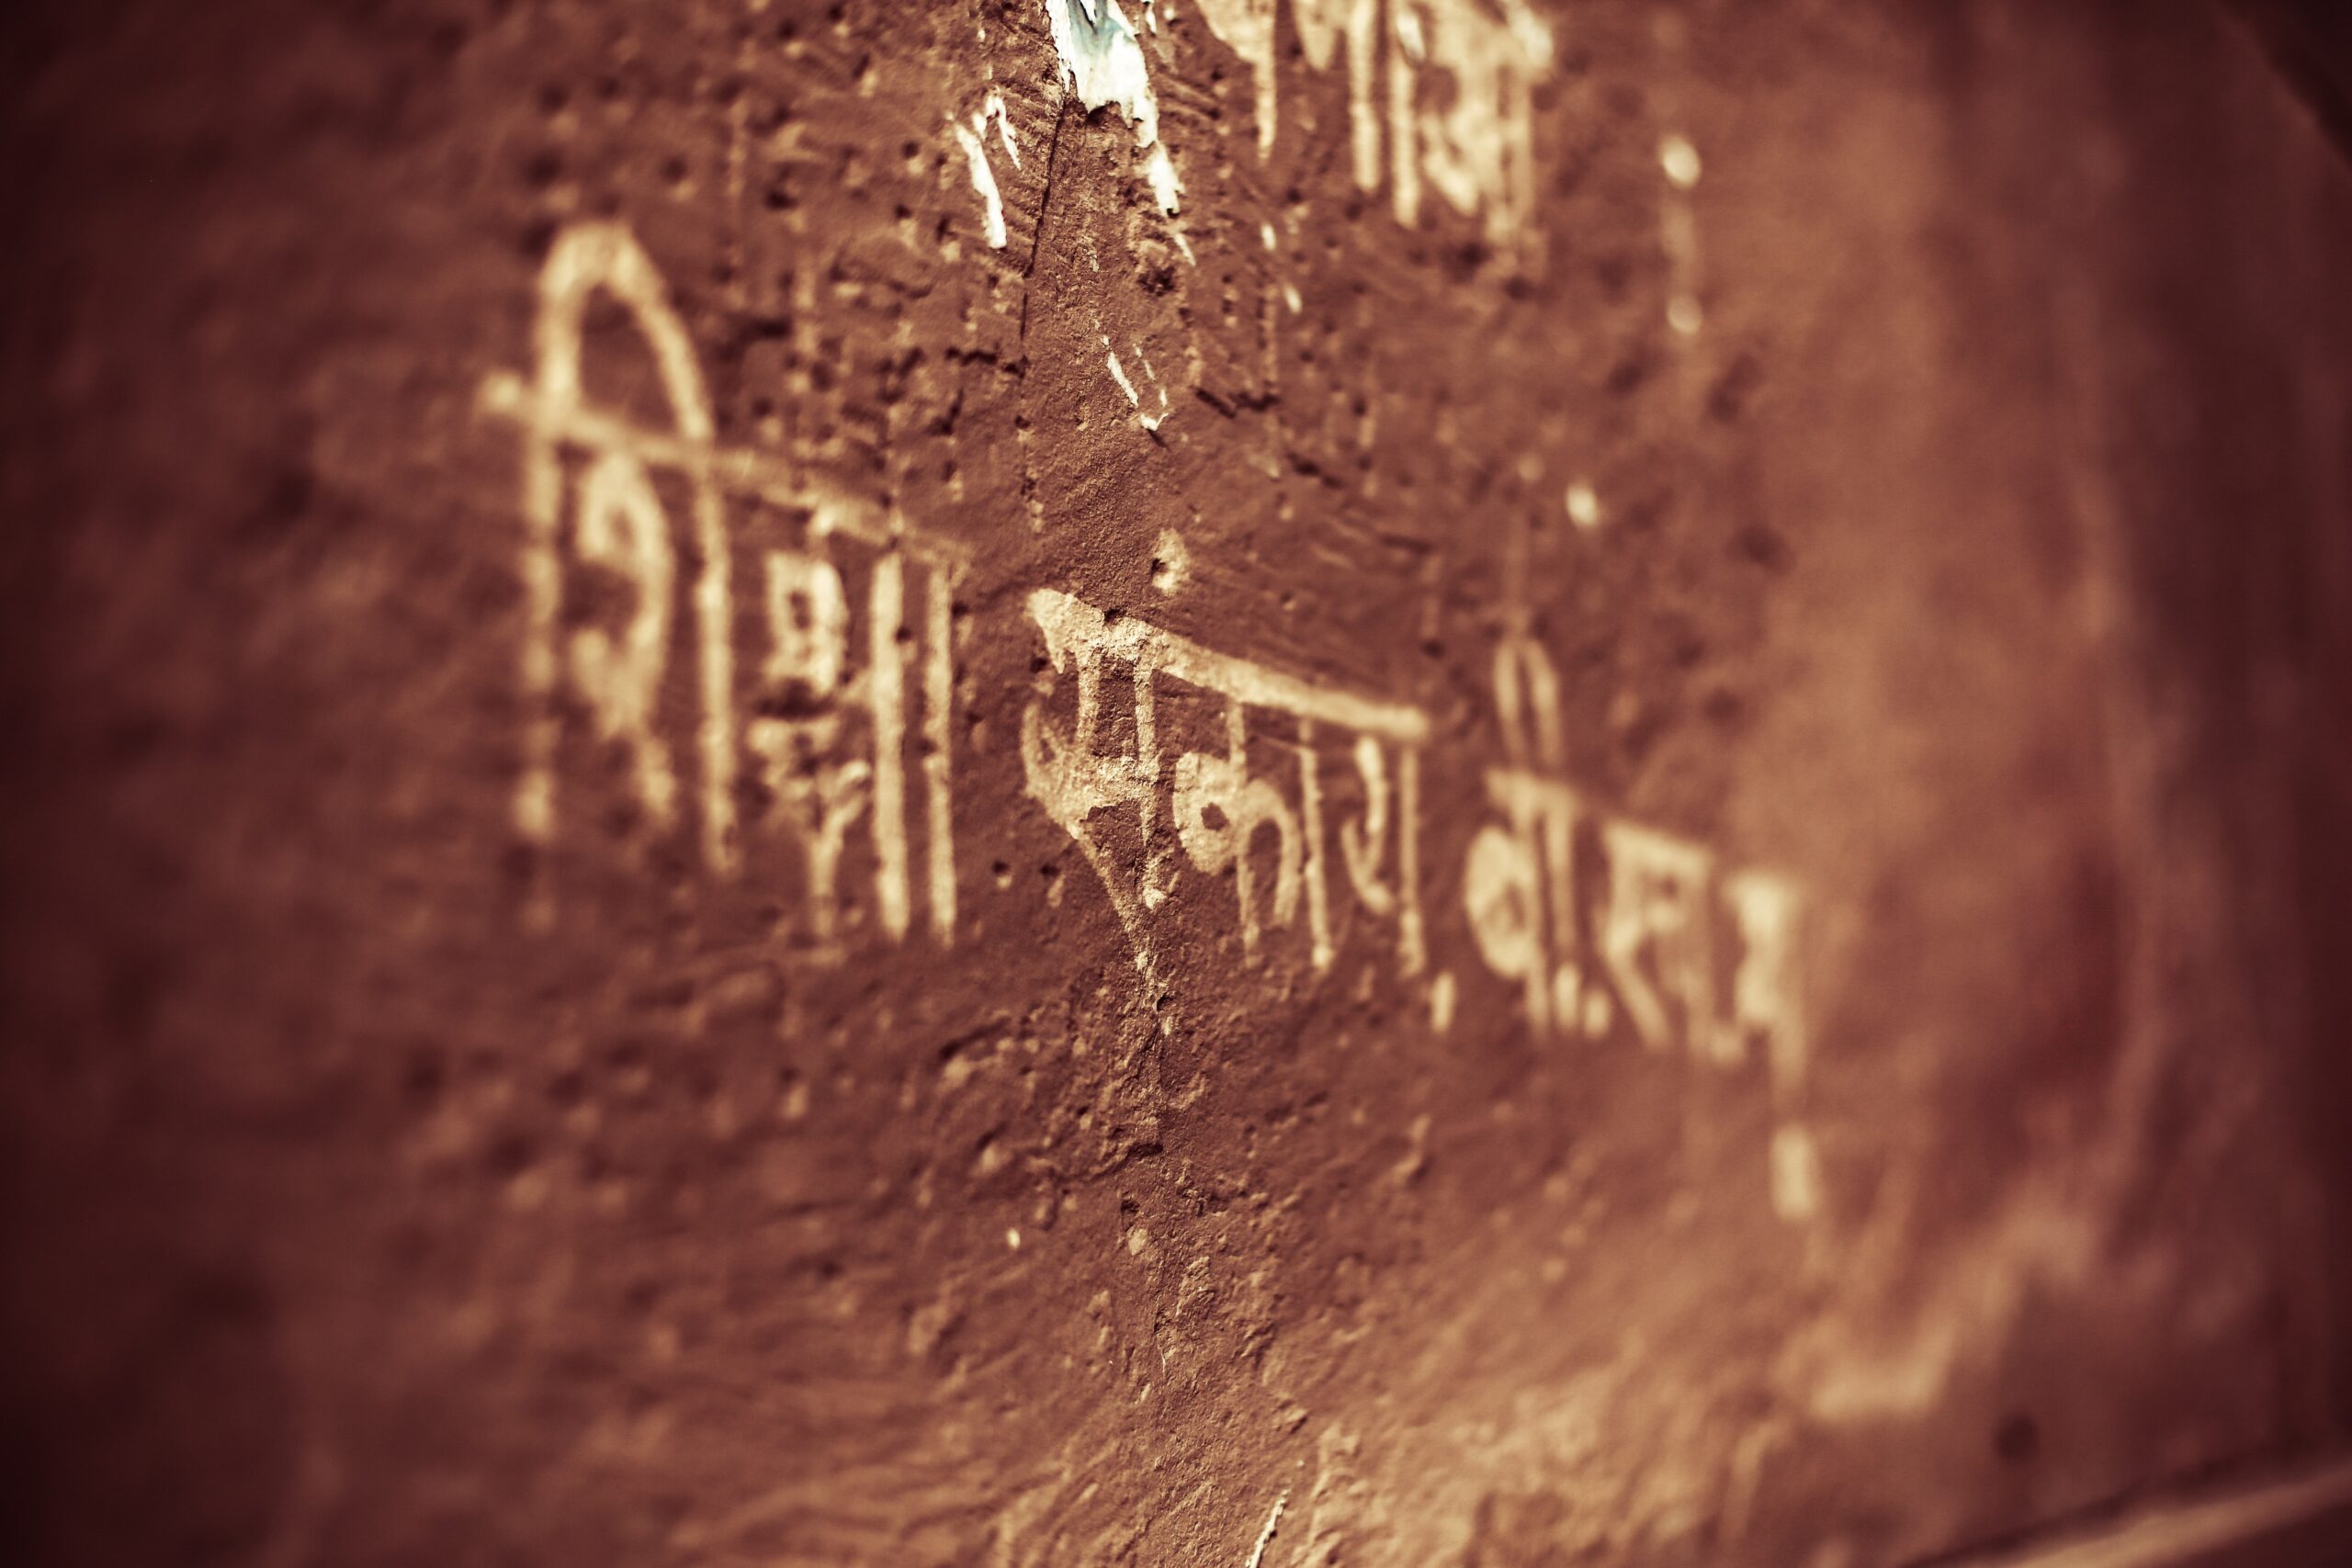 Sanskrit Polysemous Words written on a wall